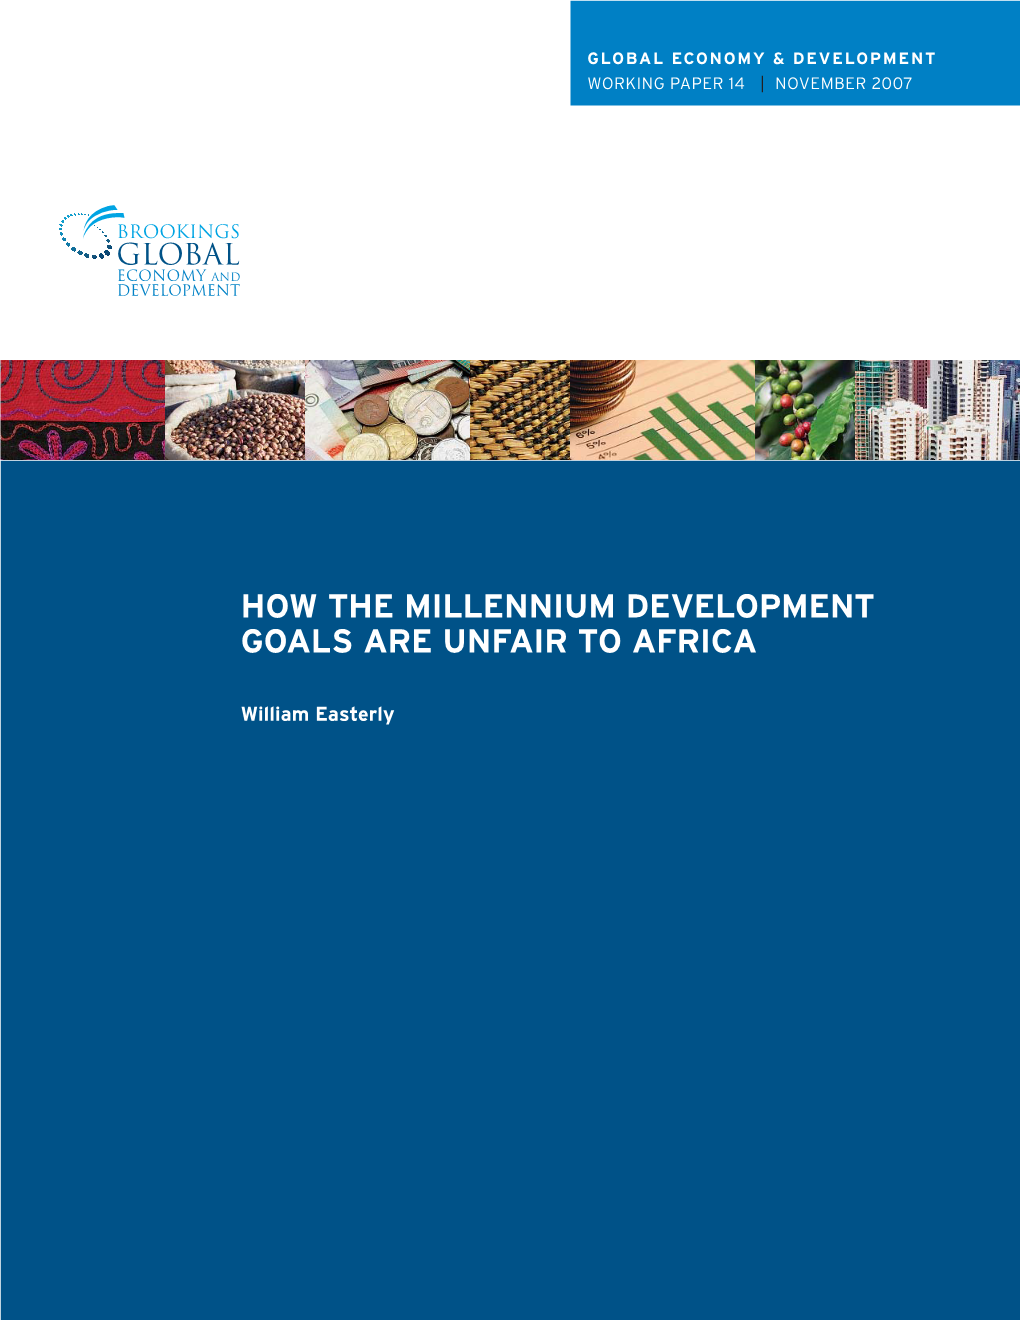 How the Millennium Development Goals Are Unfair to Africa